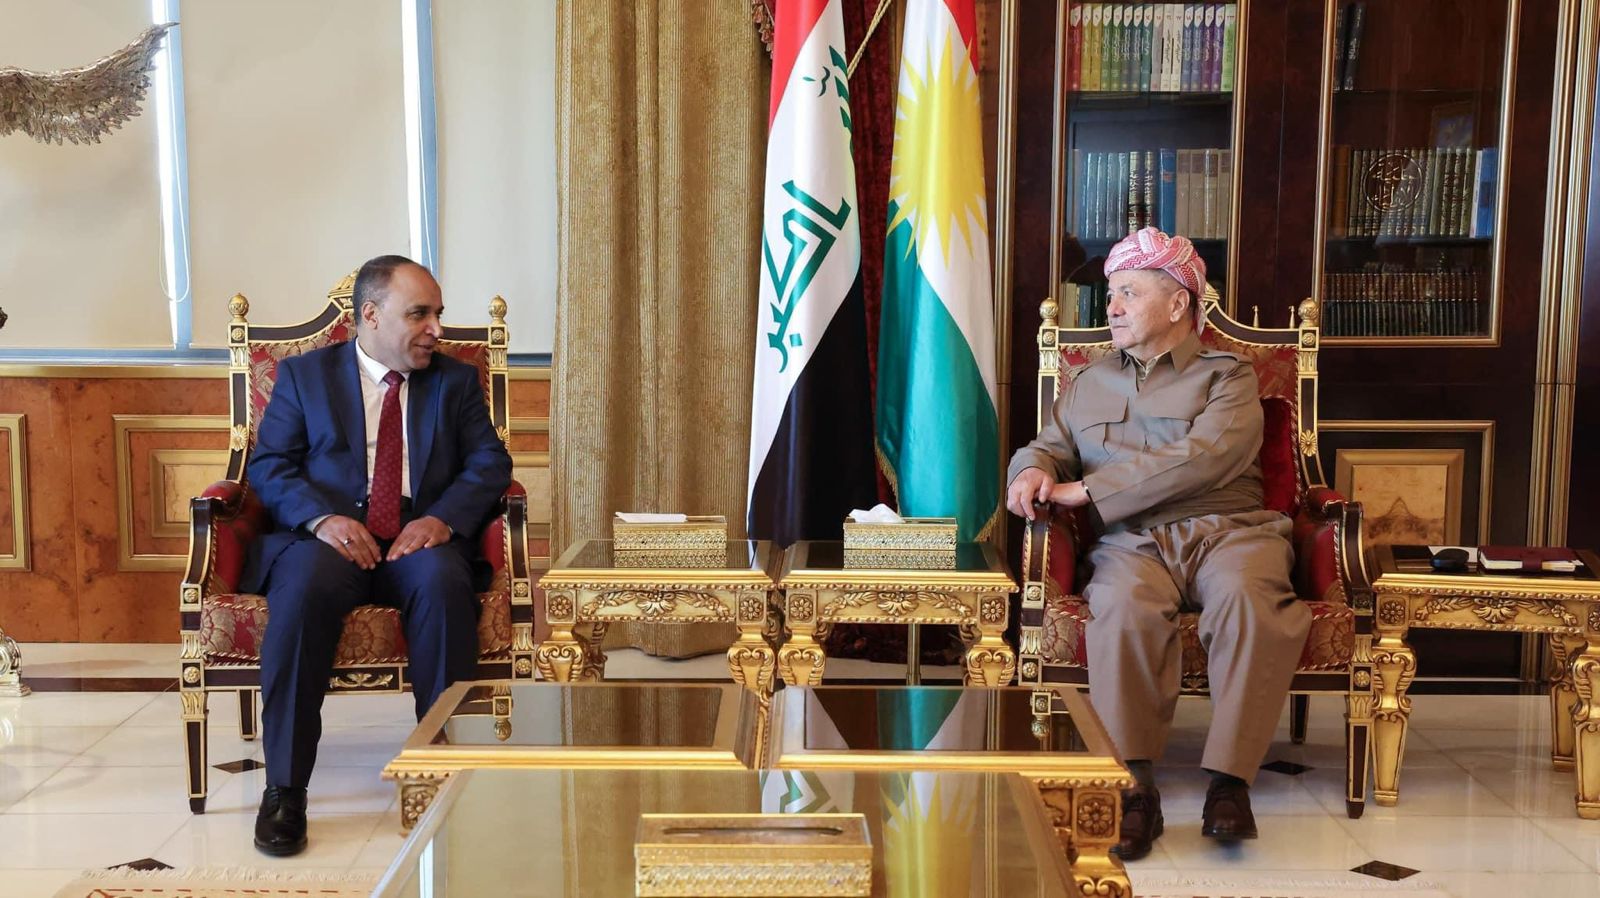 Leader Barzani meets Iraqi Electoral Commission Head to discuss election preparations